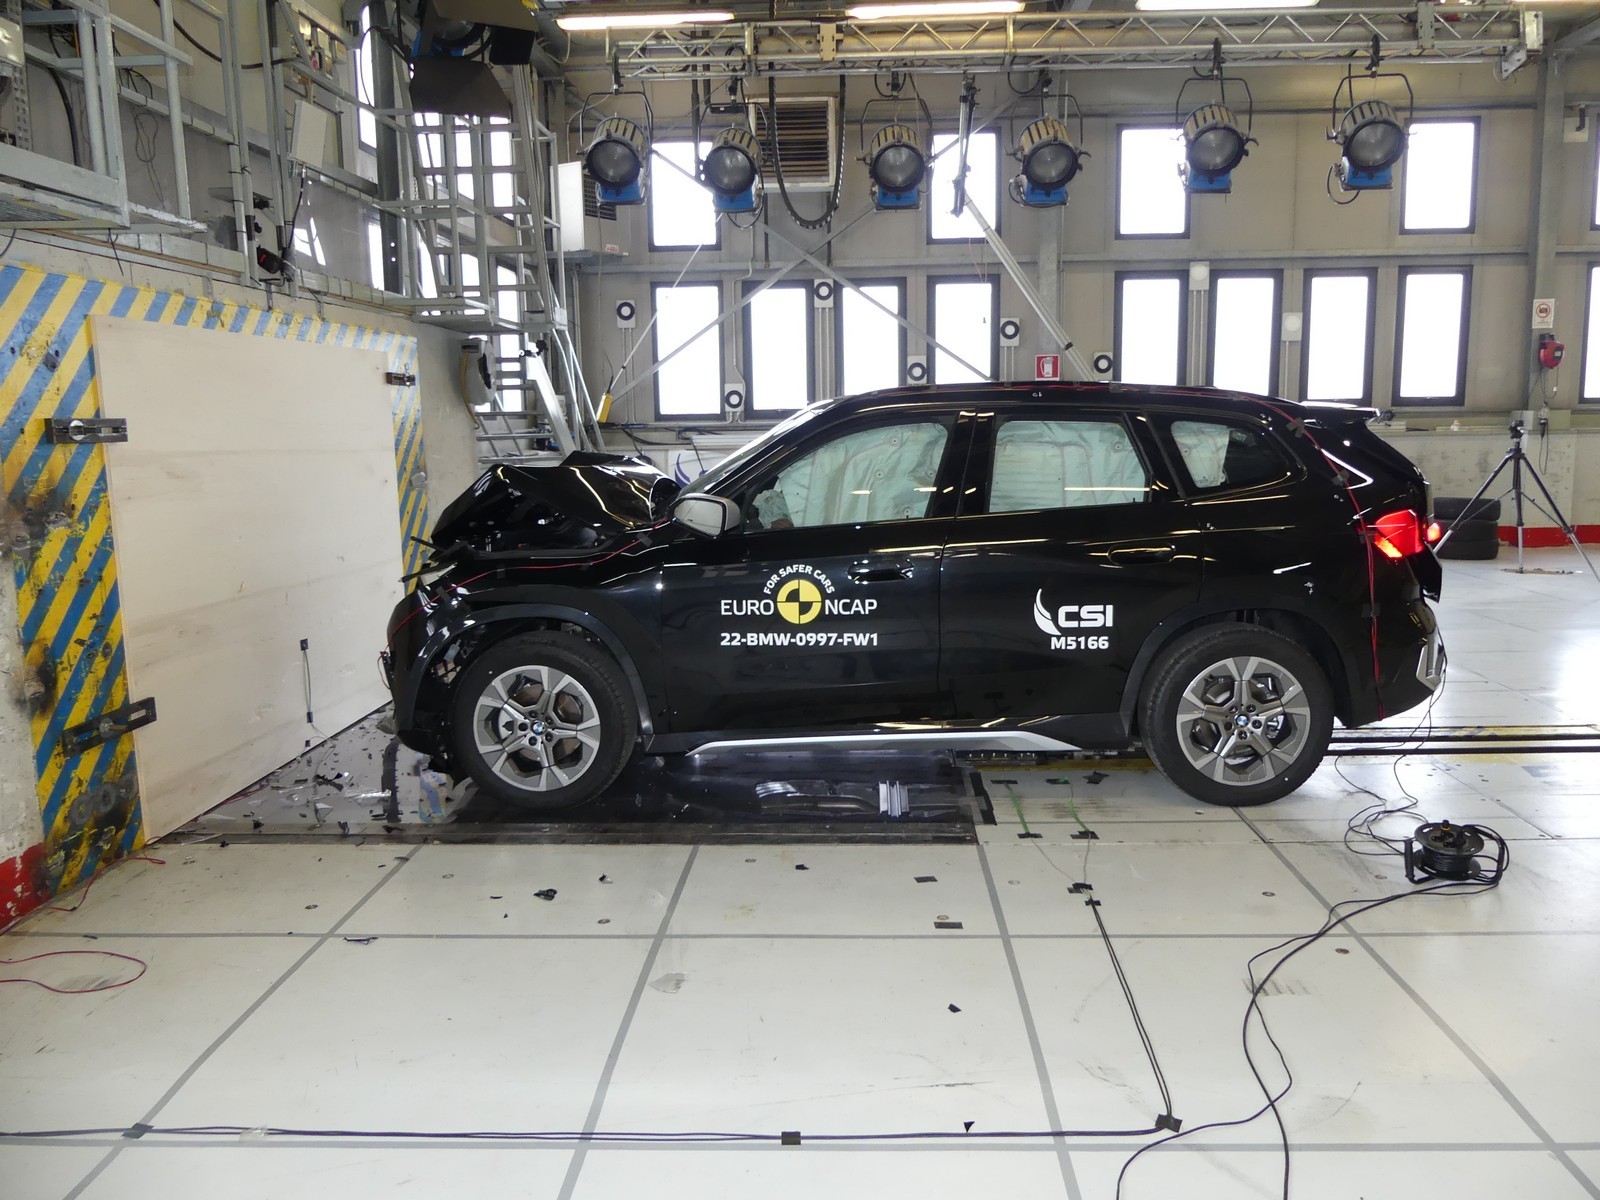 BMW X1 Euro NCAP crash test 5